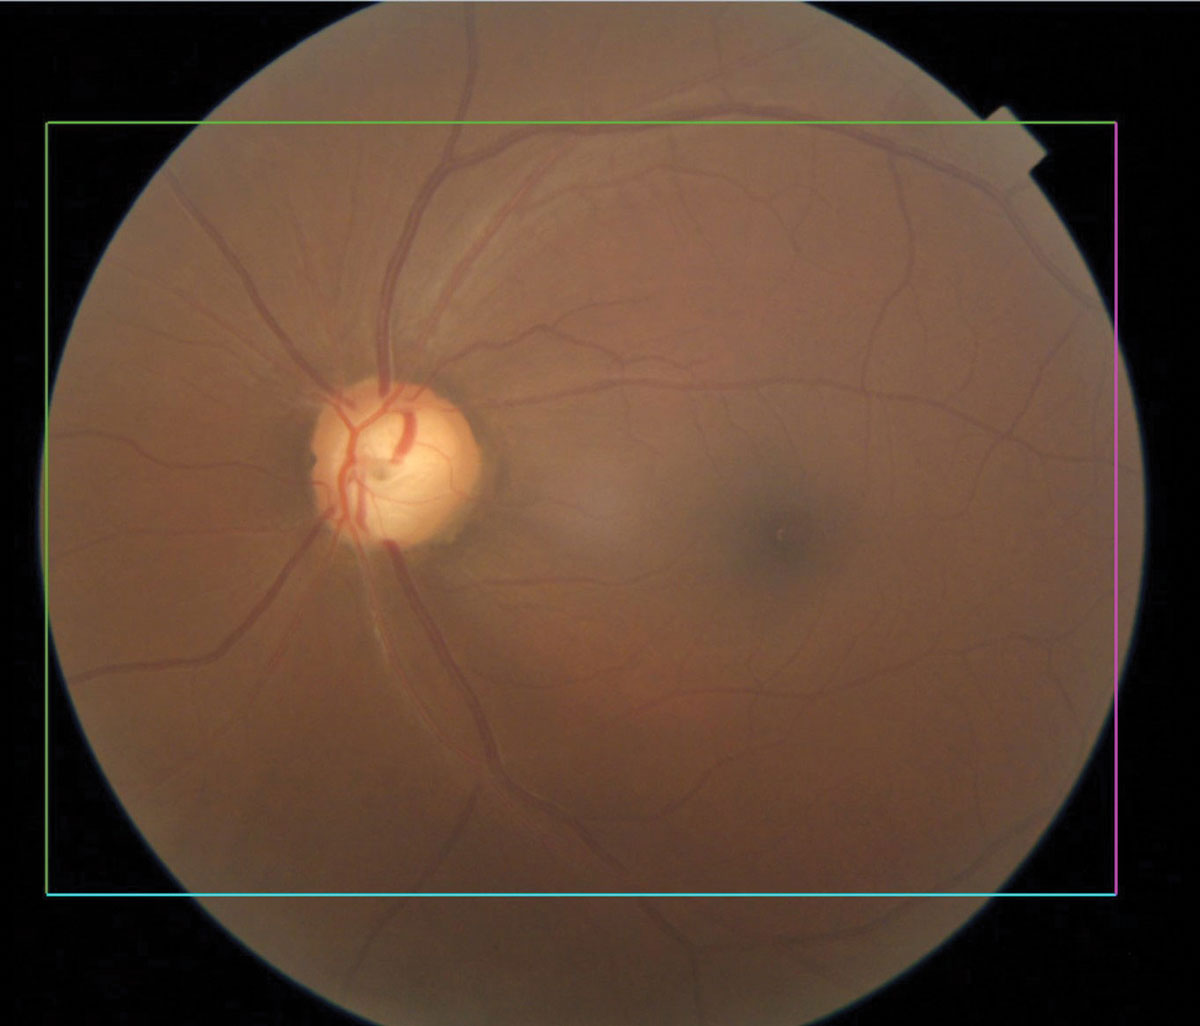 Glaucomatous optic nerve with inferior notching.